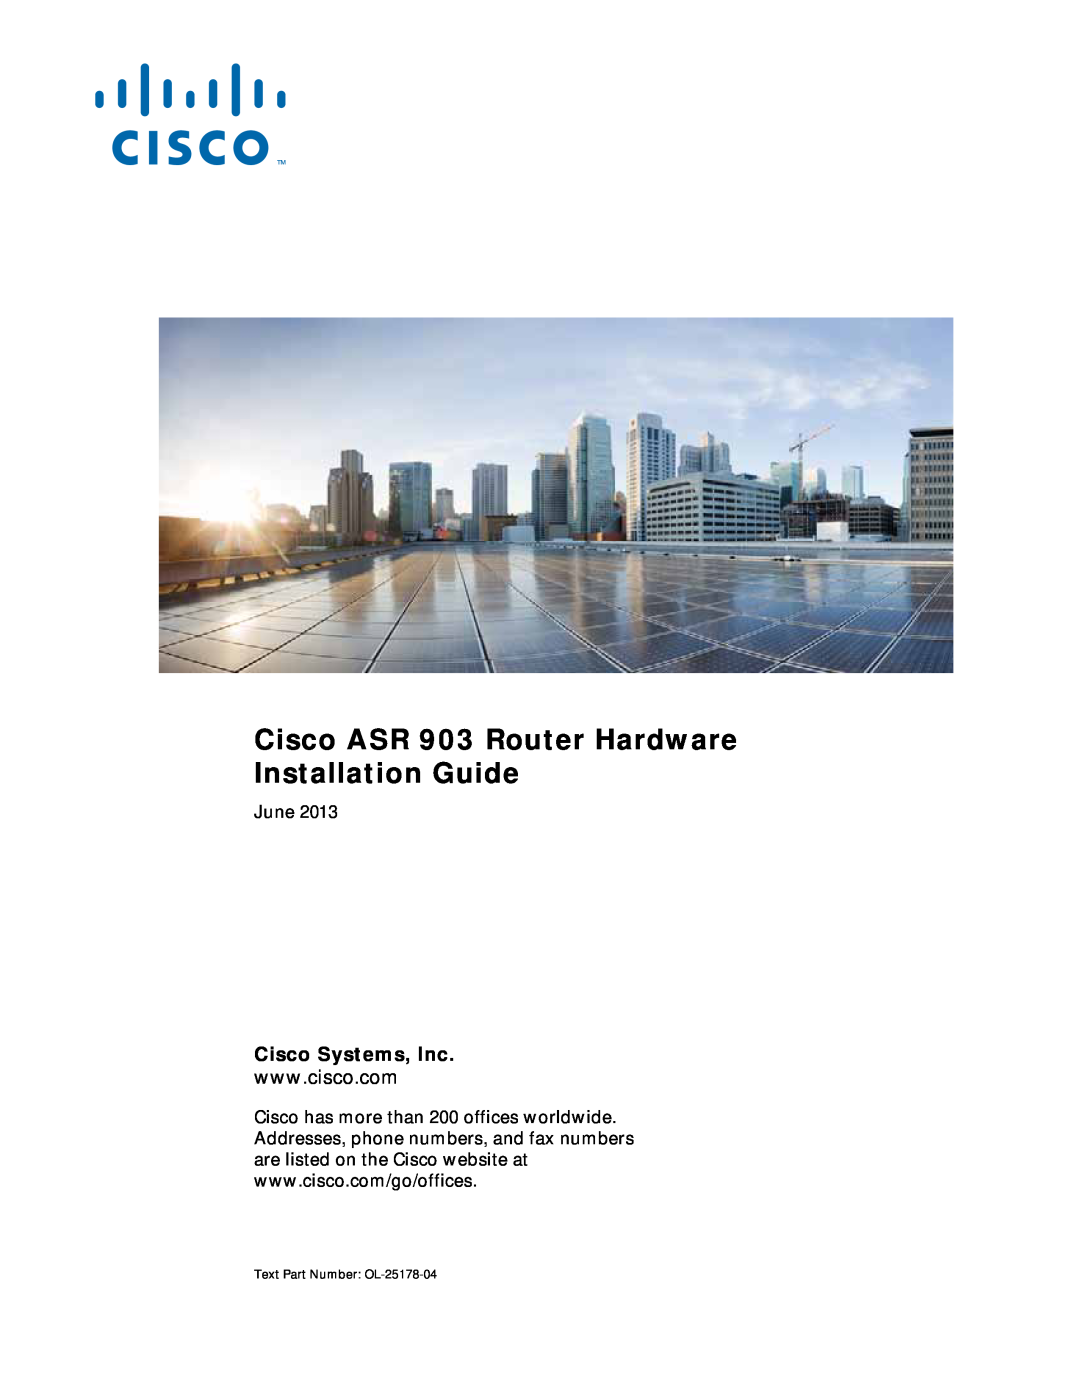 Cisco Systems manual Cisco Systems, Inc, June, Cisco ASR 903 Router Hardware Installation Guide 